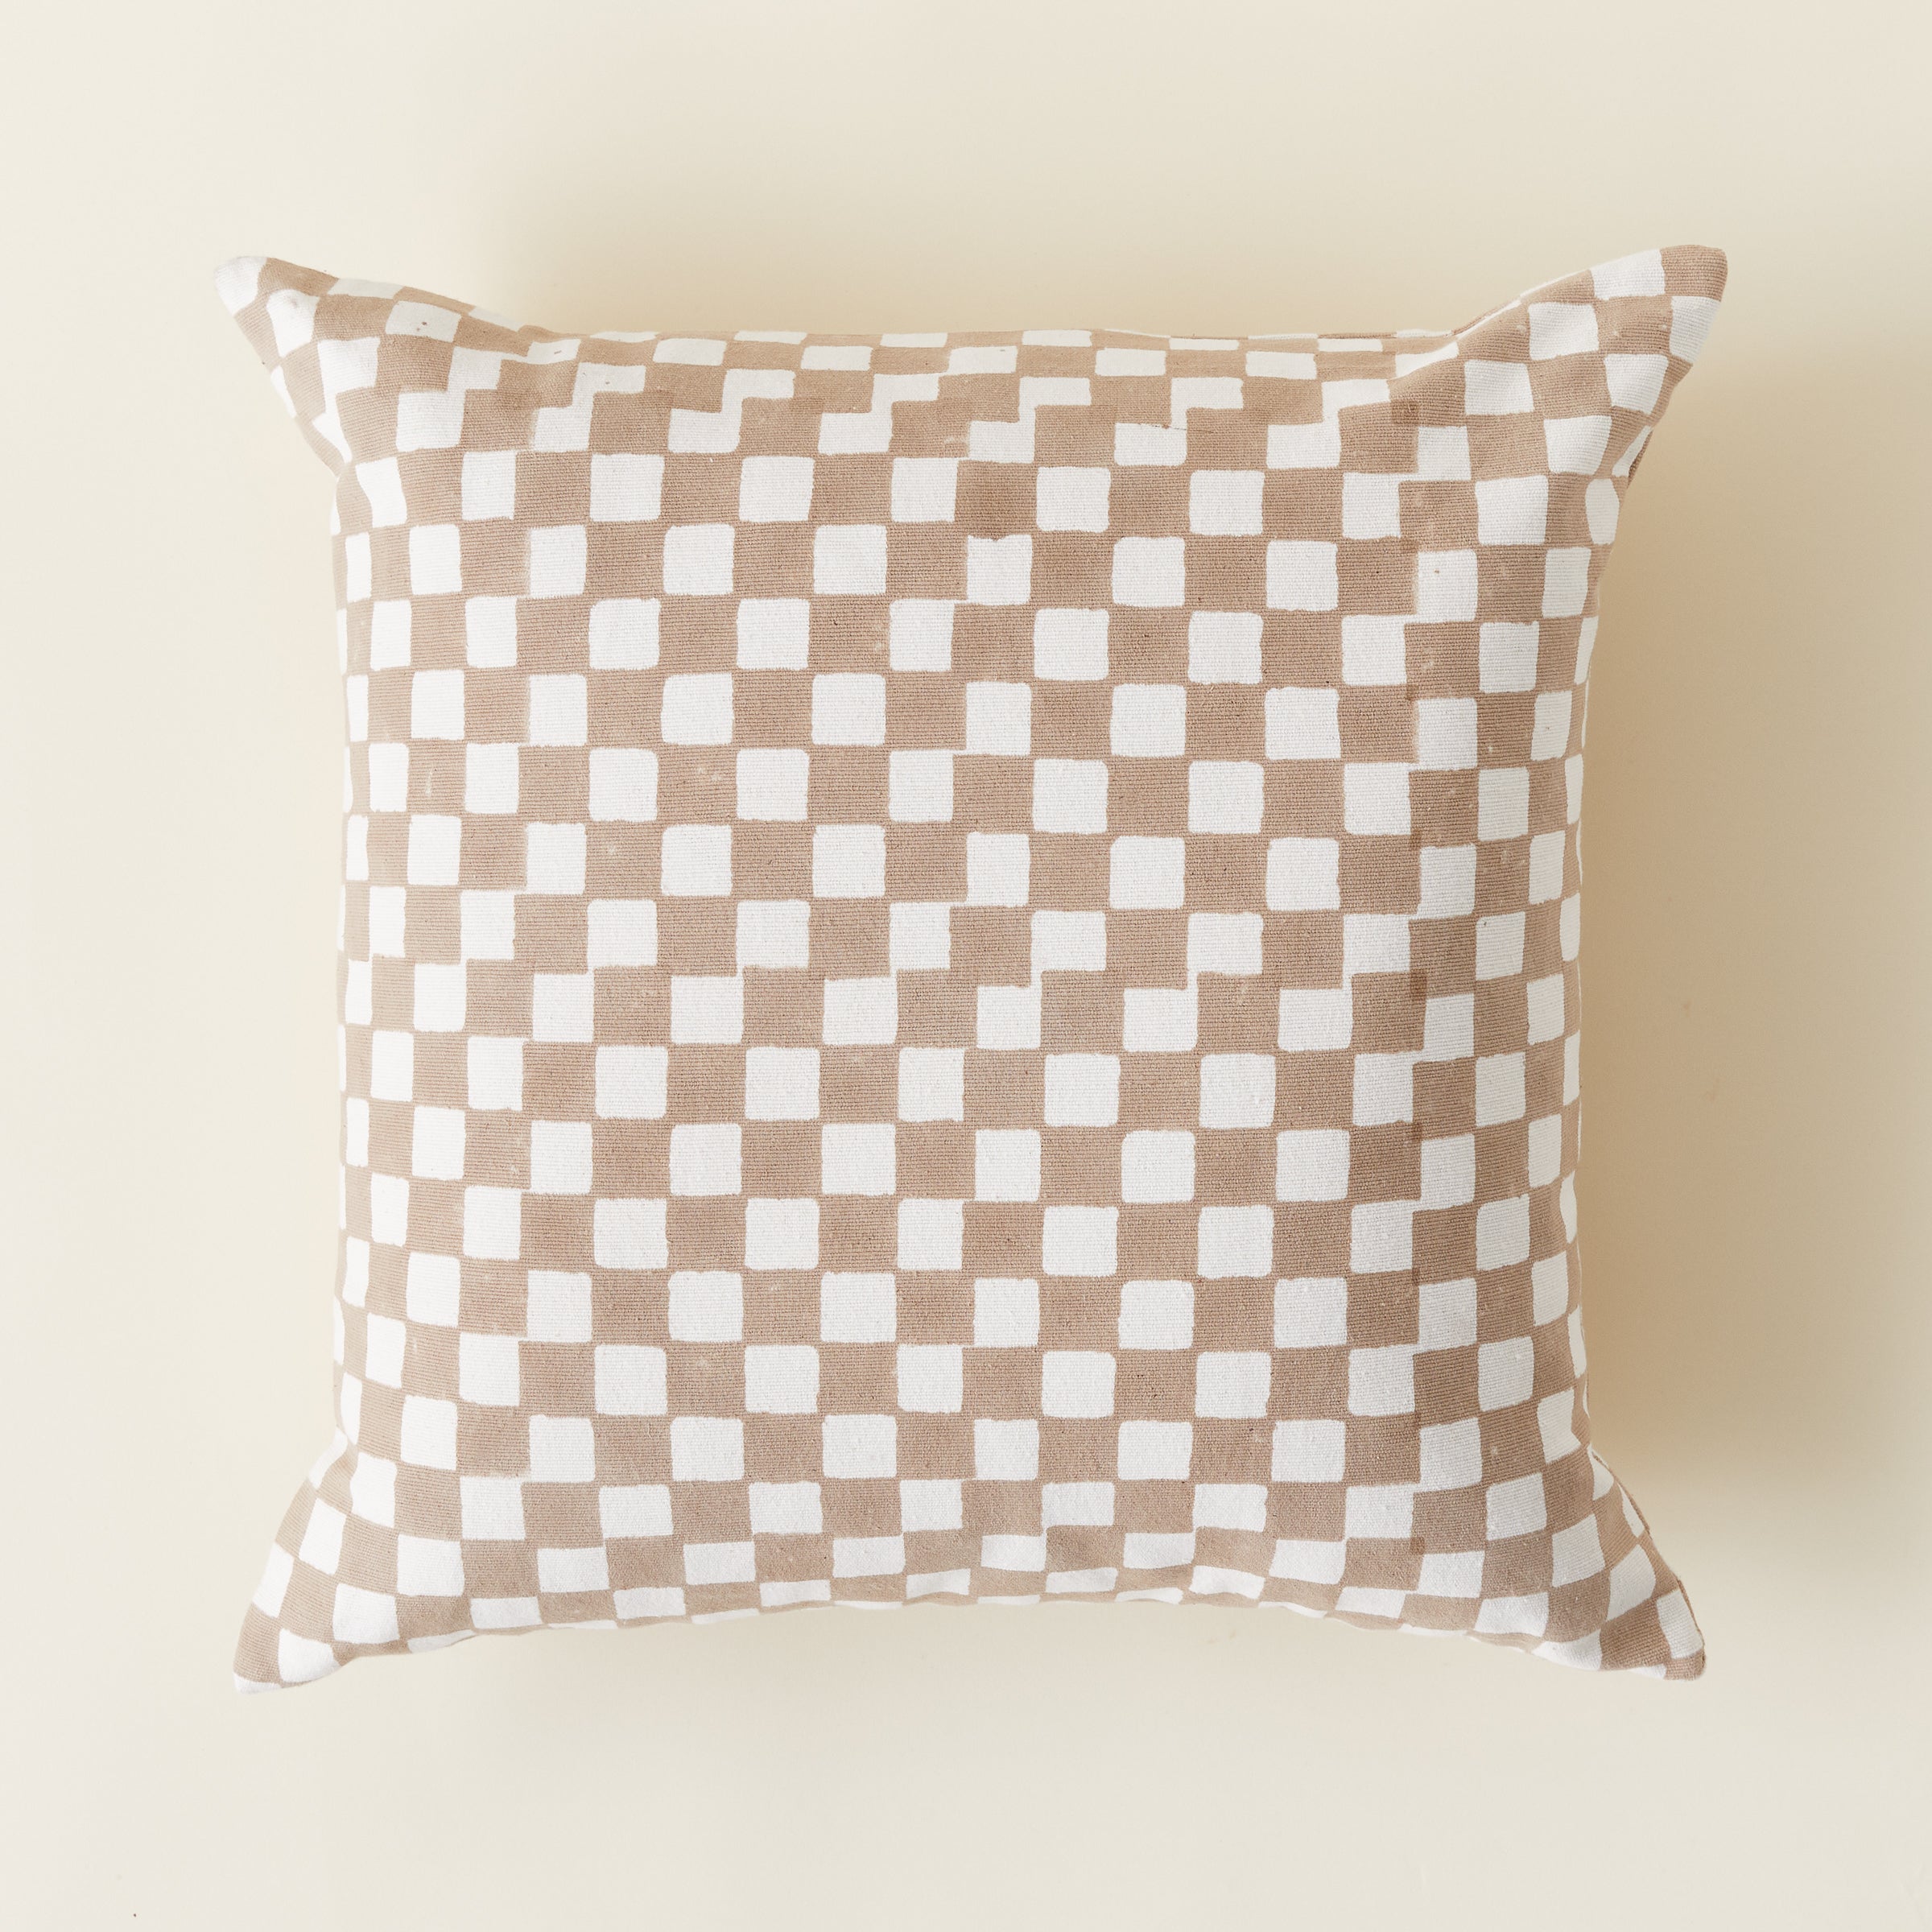 KMH x Ginger Sparrow - Checkered Pillow Cover 1